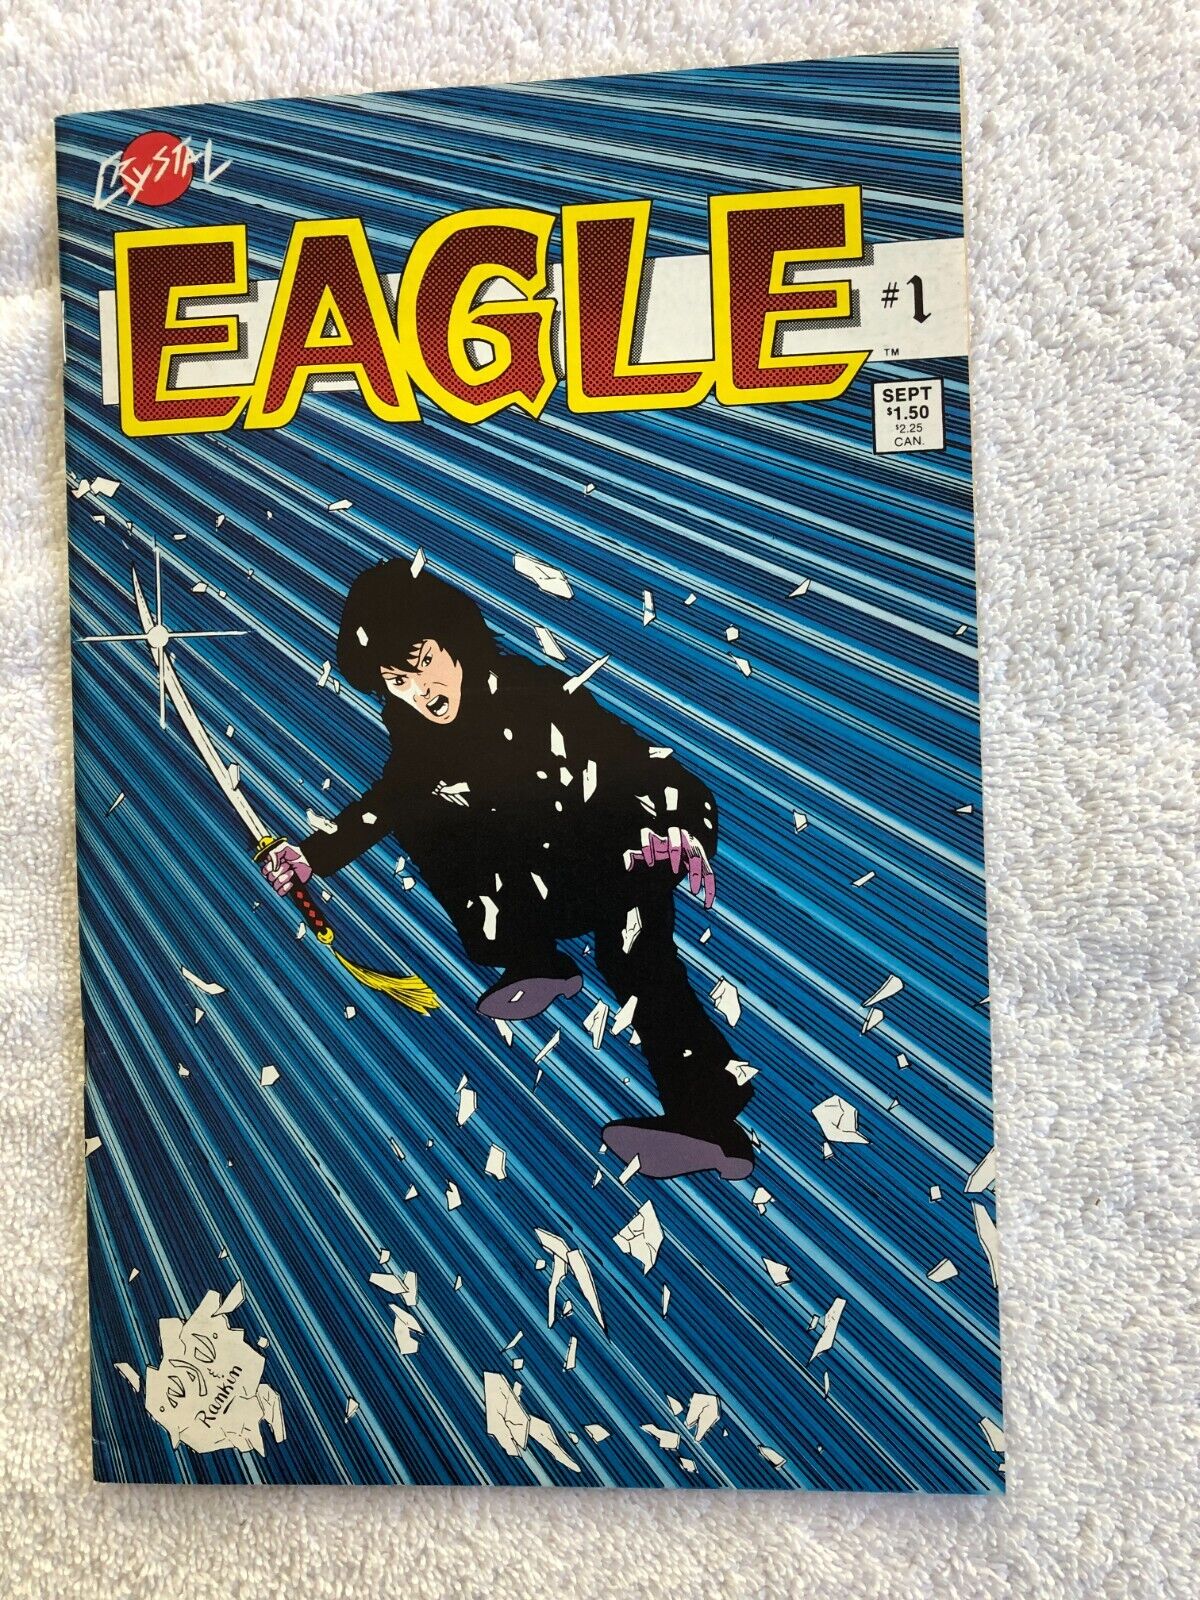 Eagle #1 (Sep 1986, Crystal-Apple Comics) VF 8.0